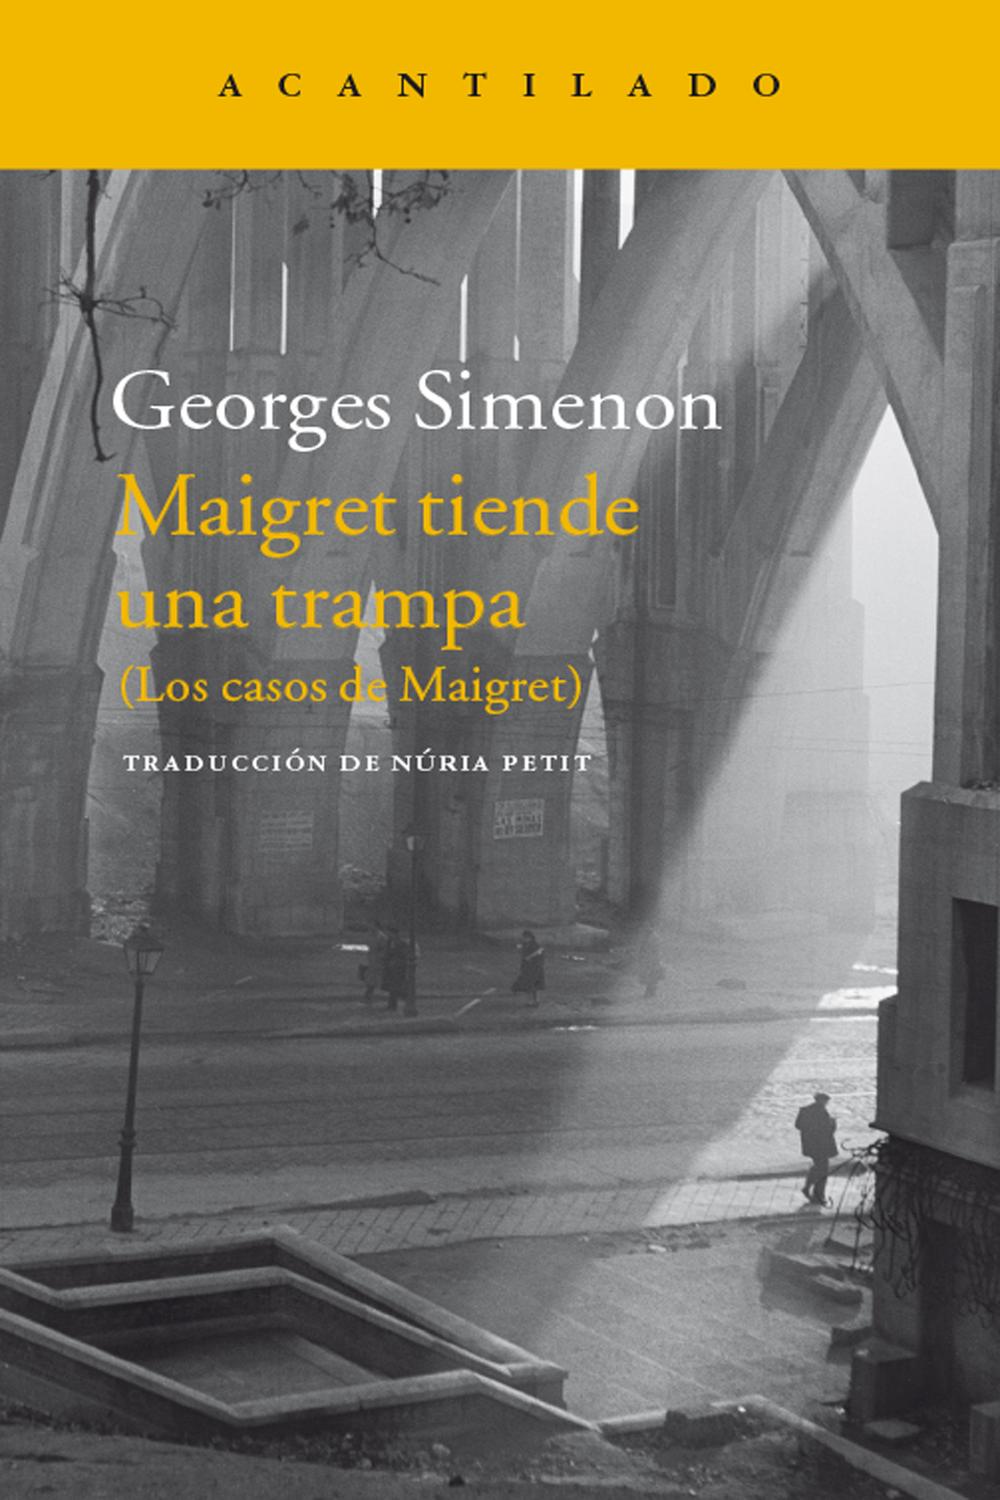 Maigret tiende una trampa - Georges Simenon